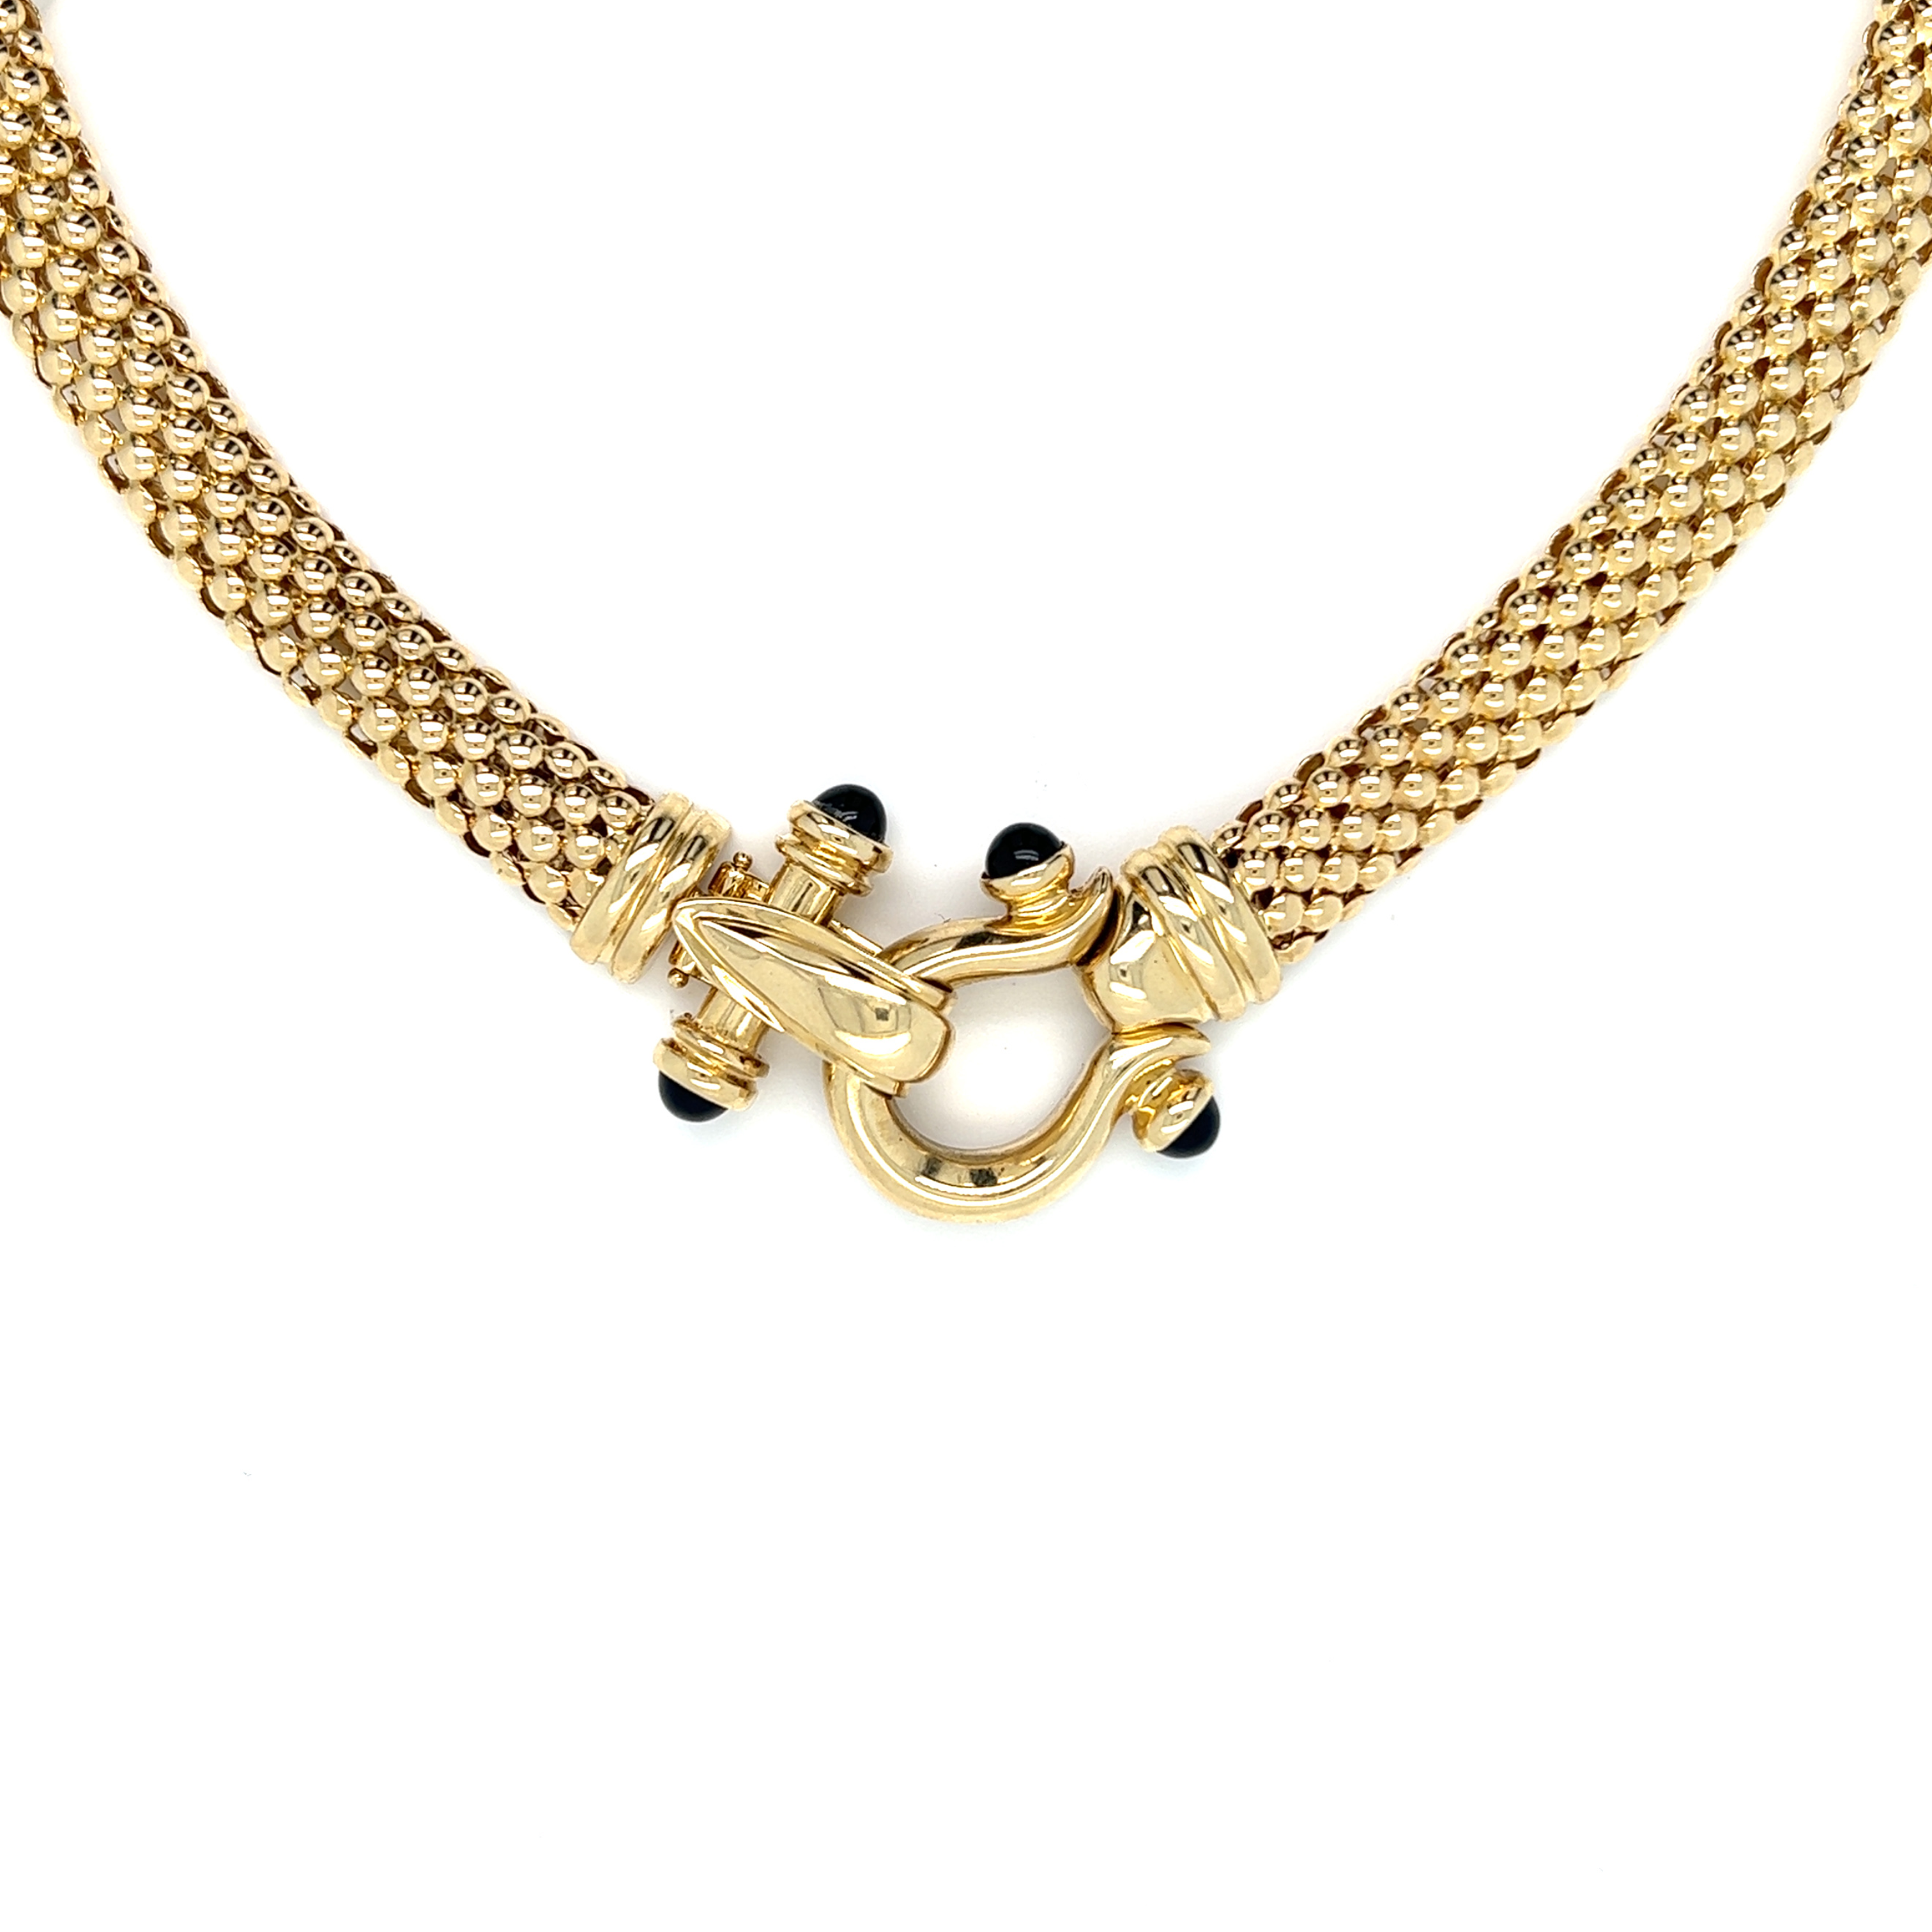 Yellow 14 Karat Necklace Length 16" with Black Onyx Trim    dwt: 24.67